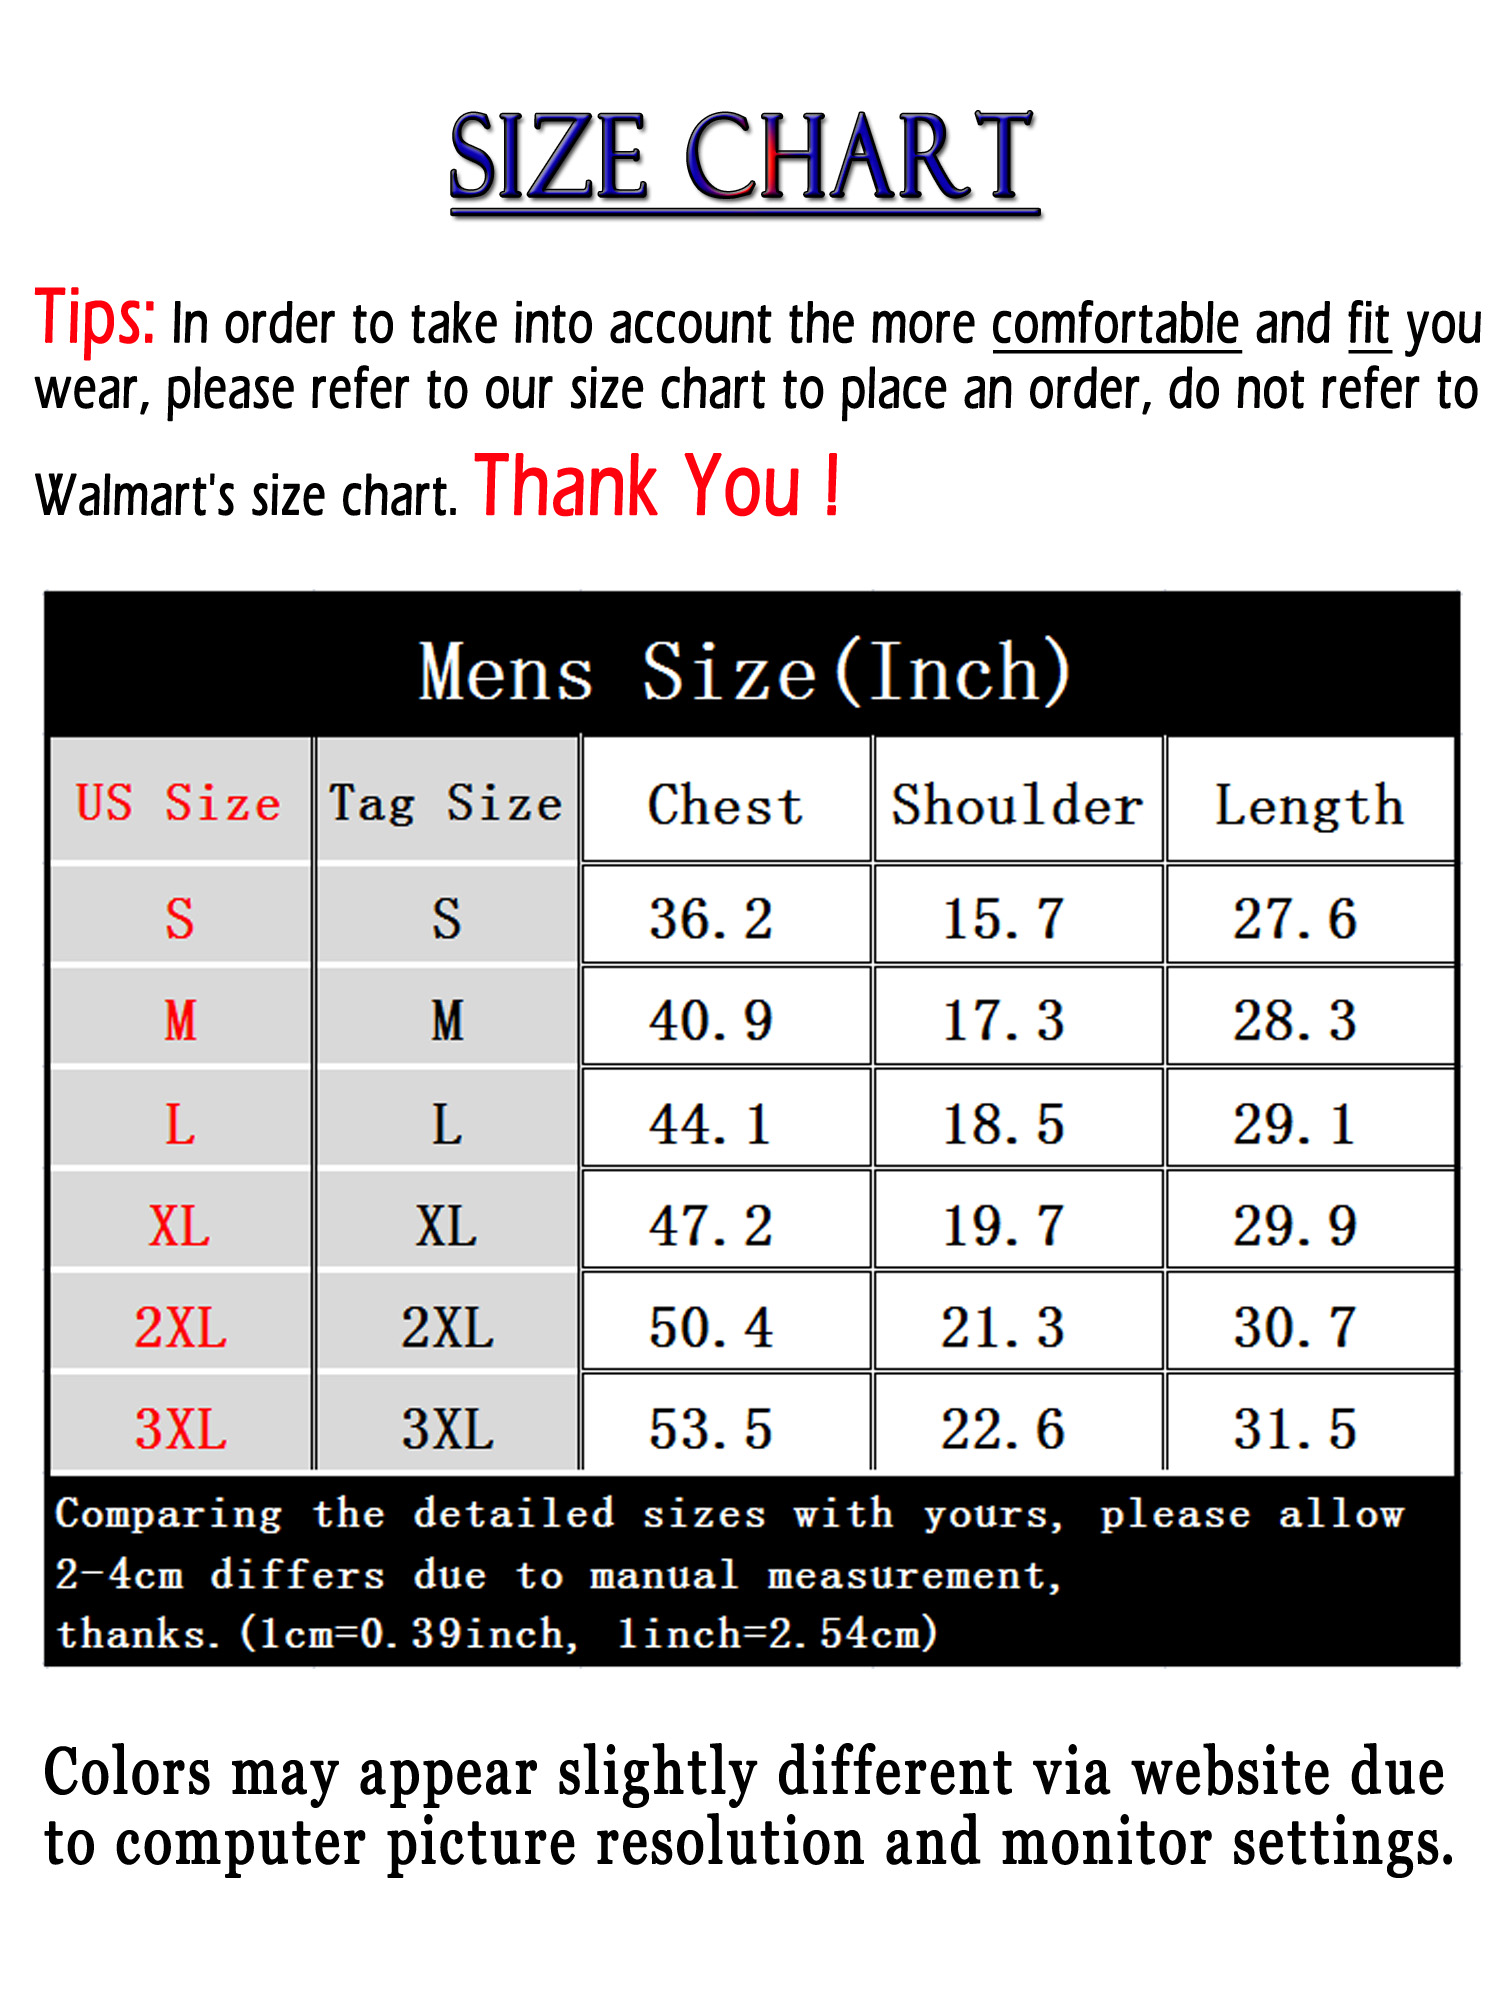 LELINTA Men's Short Sleeve Rashguard Mens Rashguard UPF 50+ Swimwear Swim Shirt Blue, 2XL - image 2 of 8